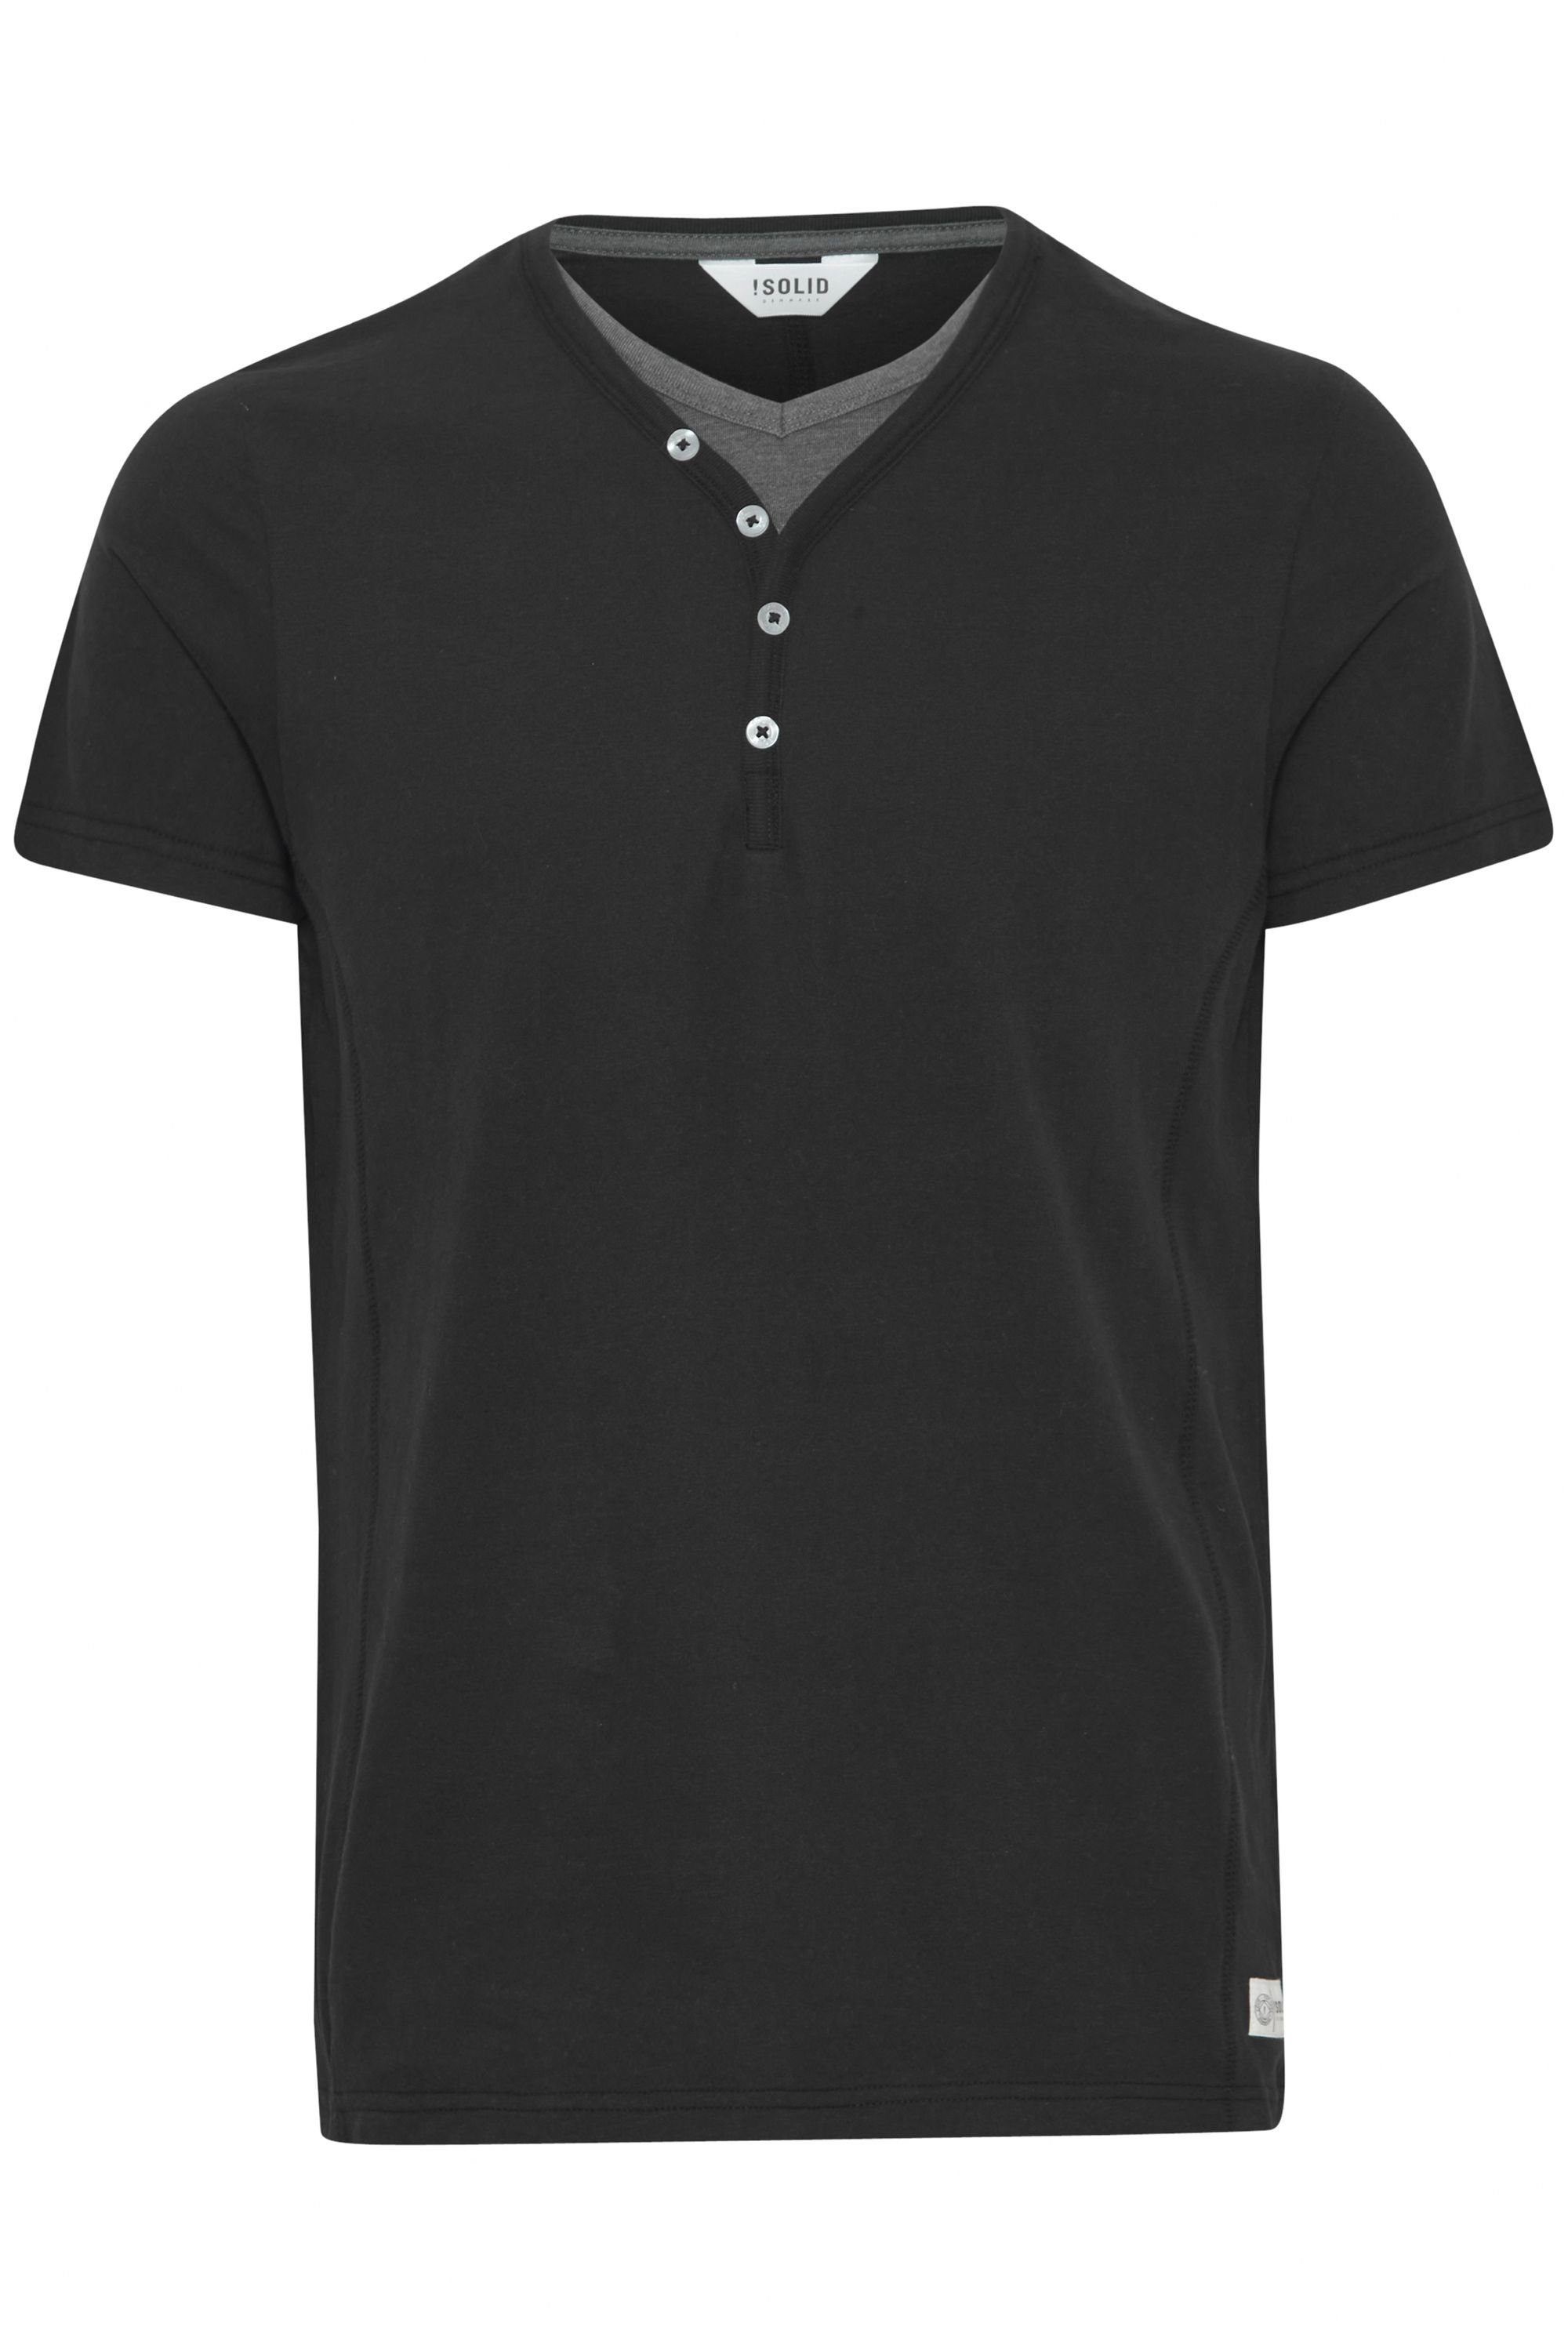 !Solid Layershirt SDDorian Kurzarmshirt im 2-in-1 Look Black (9000)